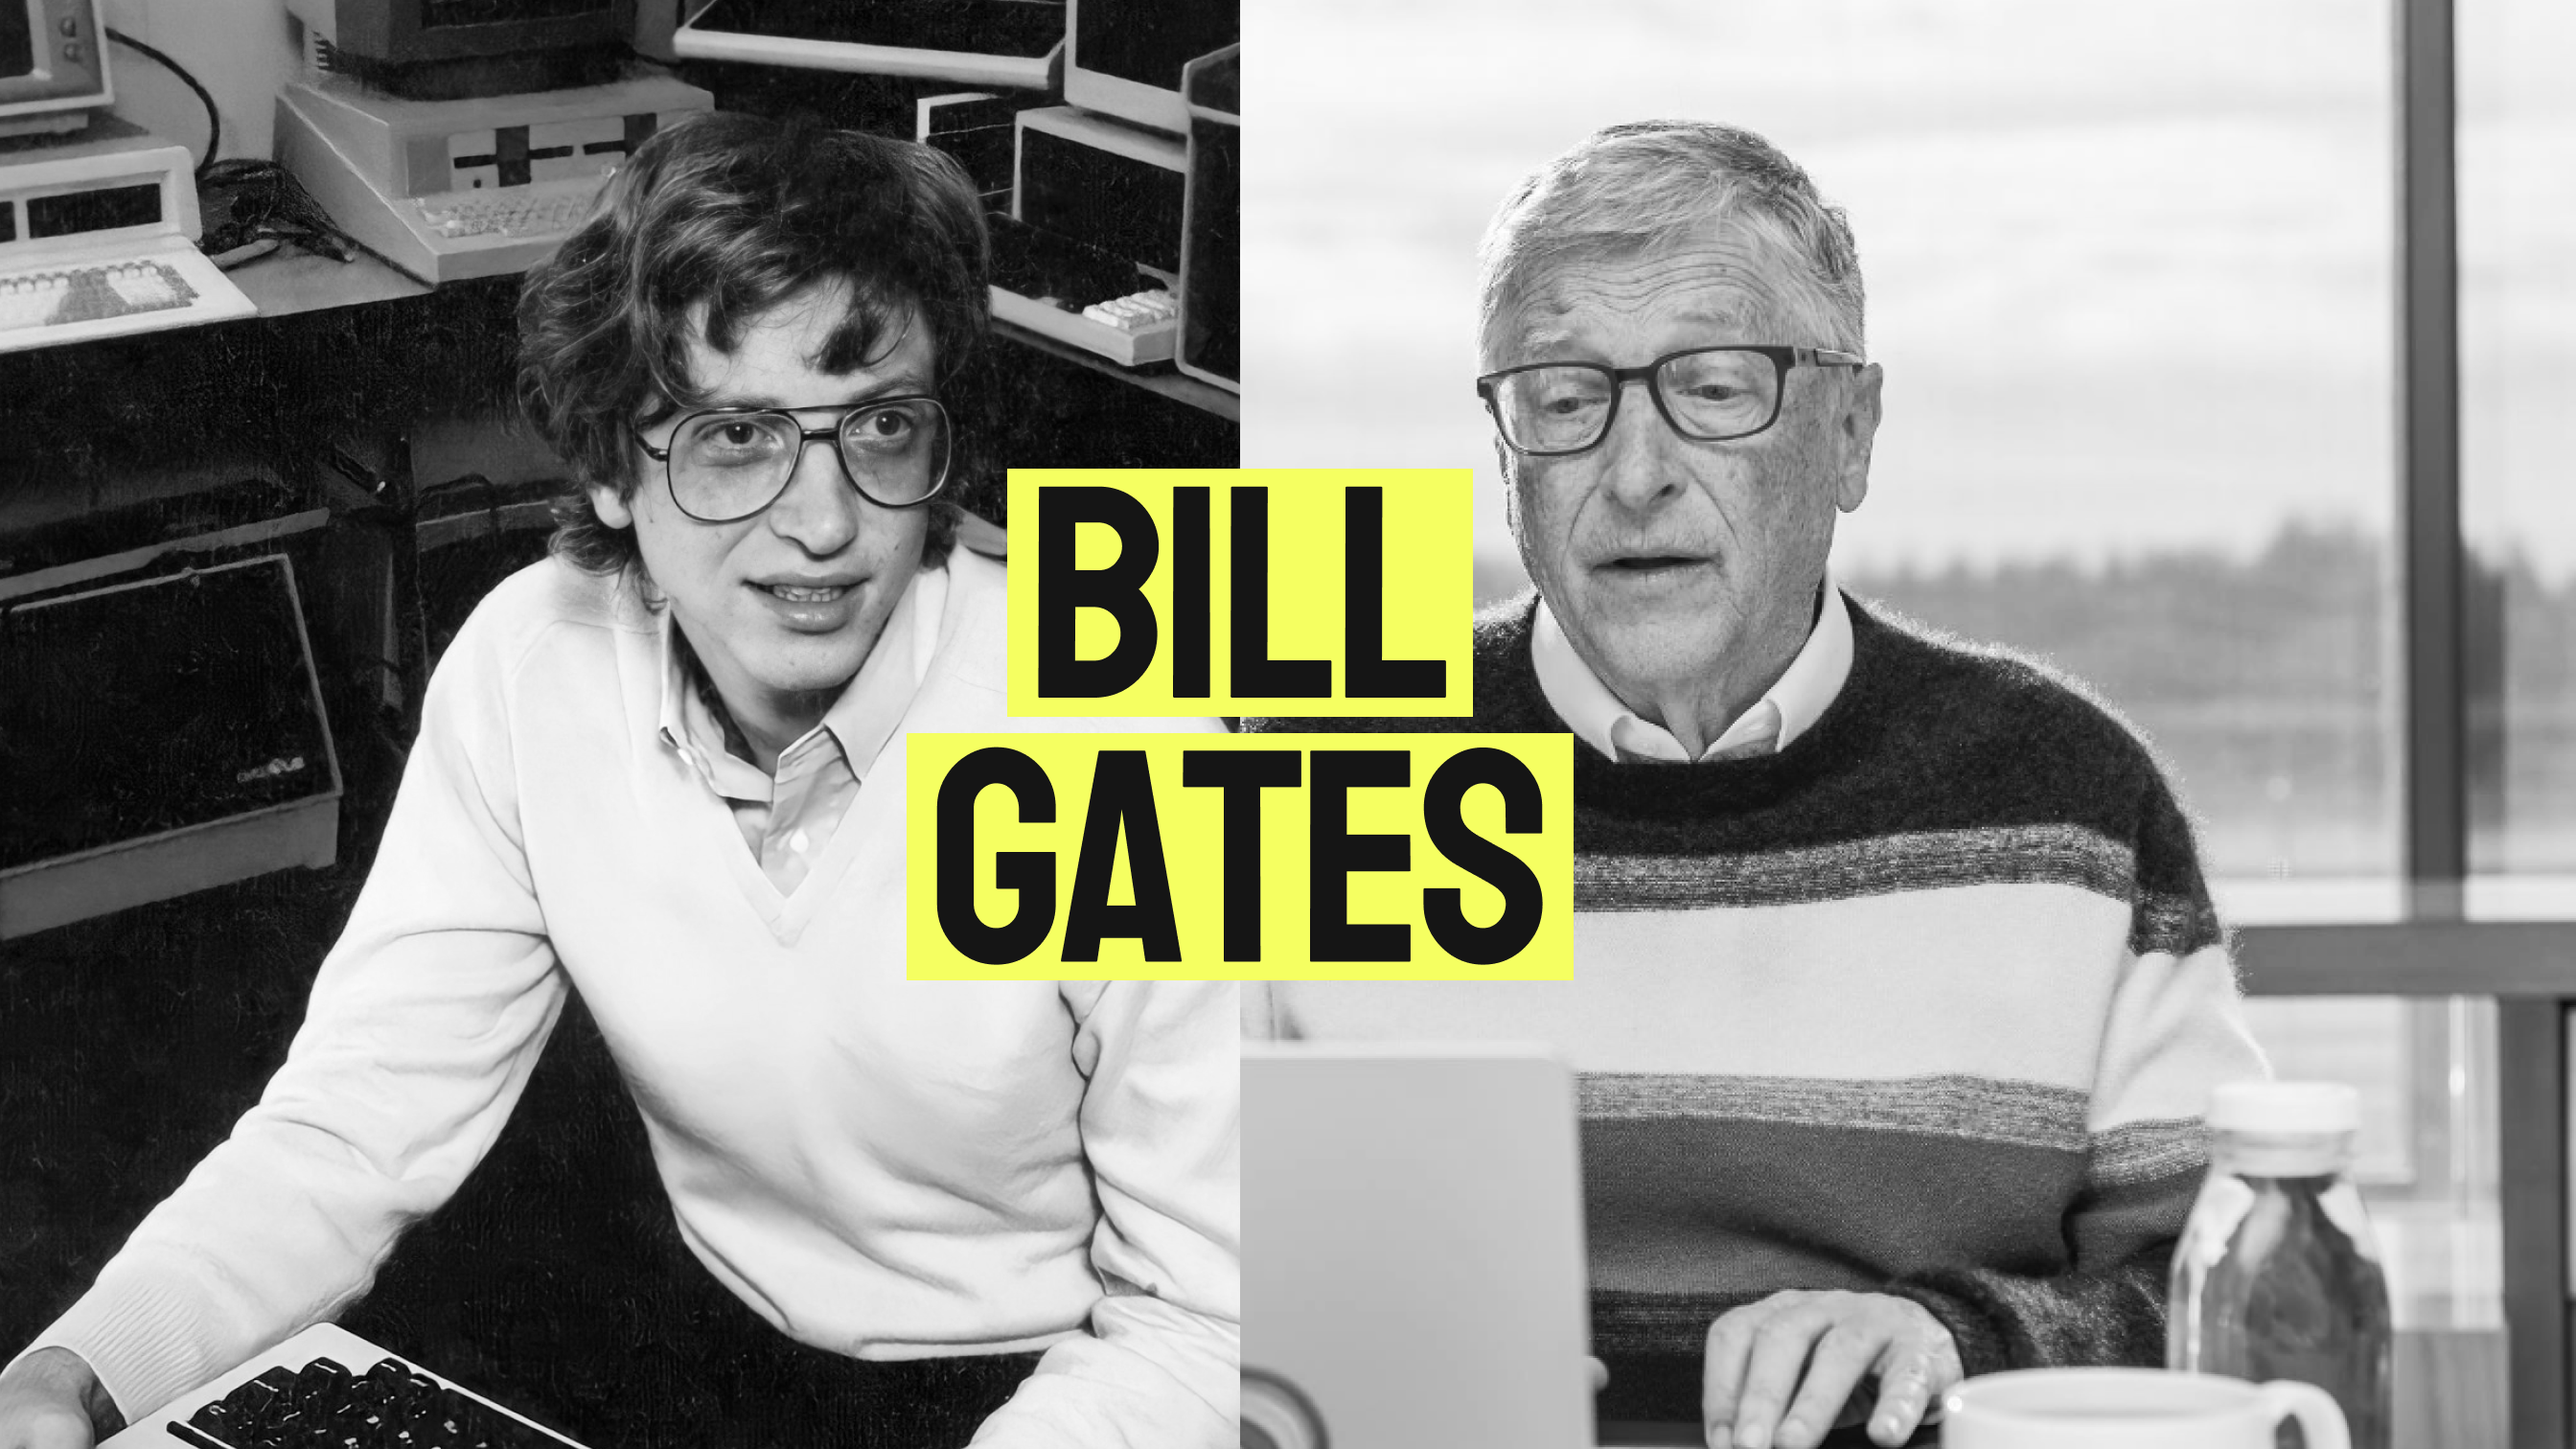 Bill Gates: Founder of Microsoft